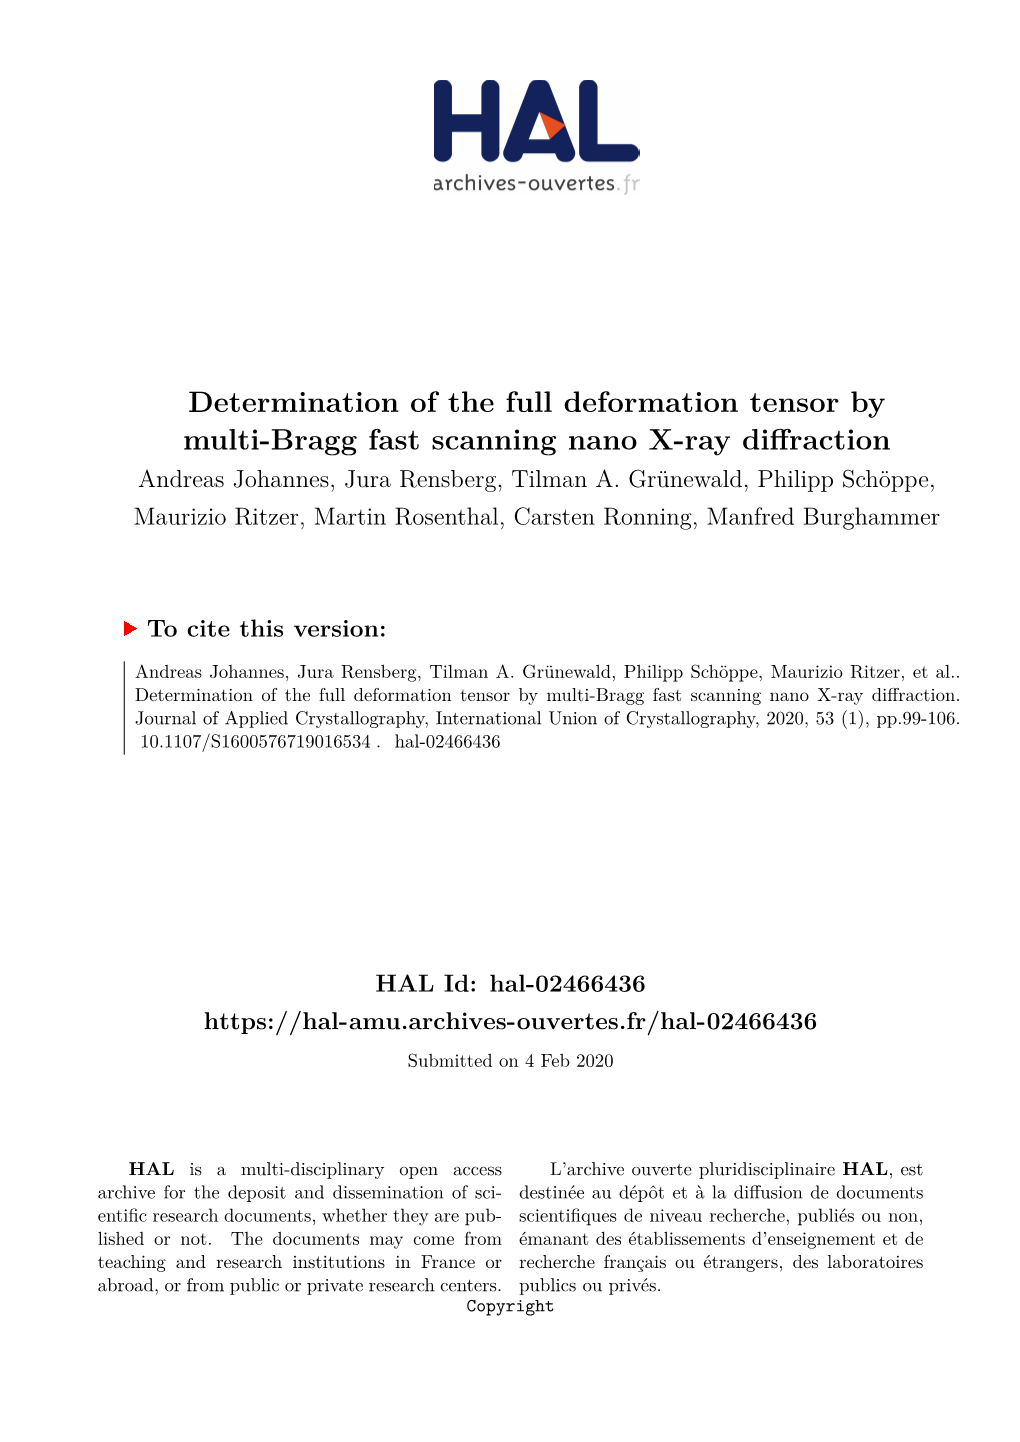 Determination of the Full Deformation Tensor by Multi-Bragg Fast Scanning Nano X-Ray Diffraction Andreas Johannes, Jura Rensberg, Tilman A